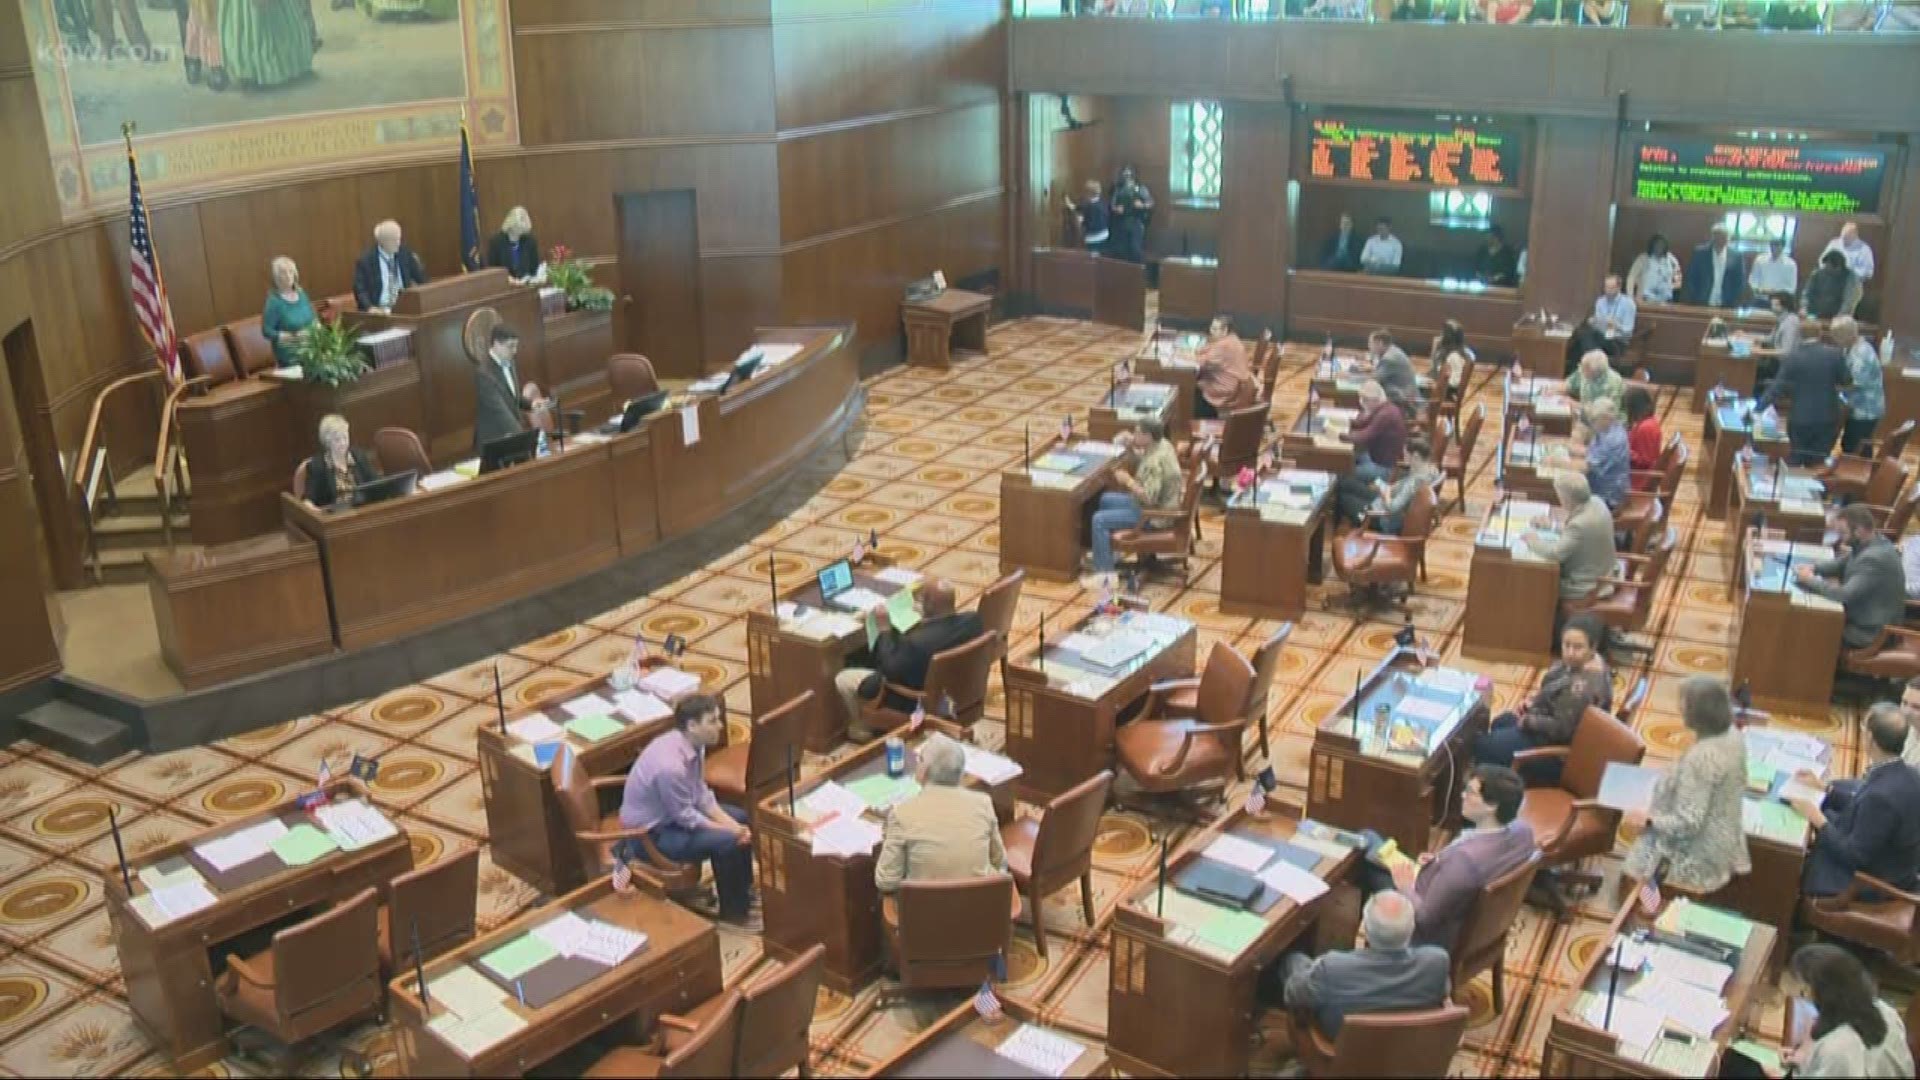 Senator deemed “threat” returns for last day of the Oregon legislative